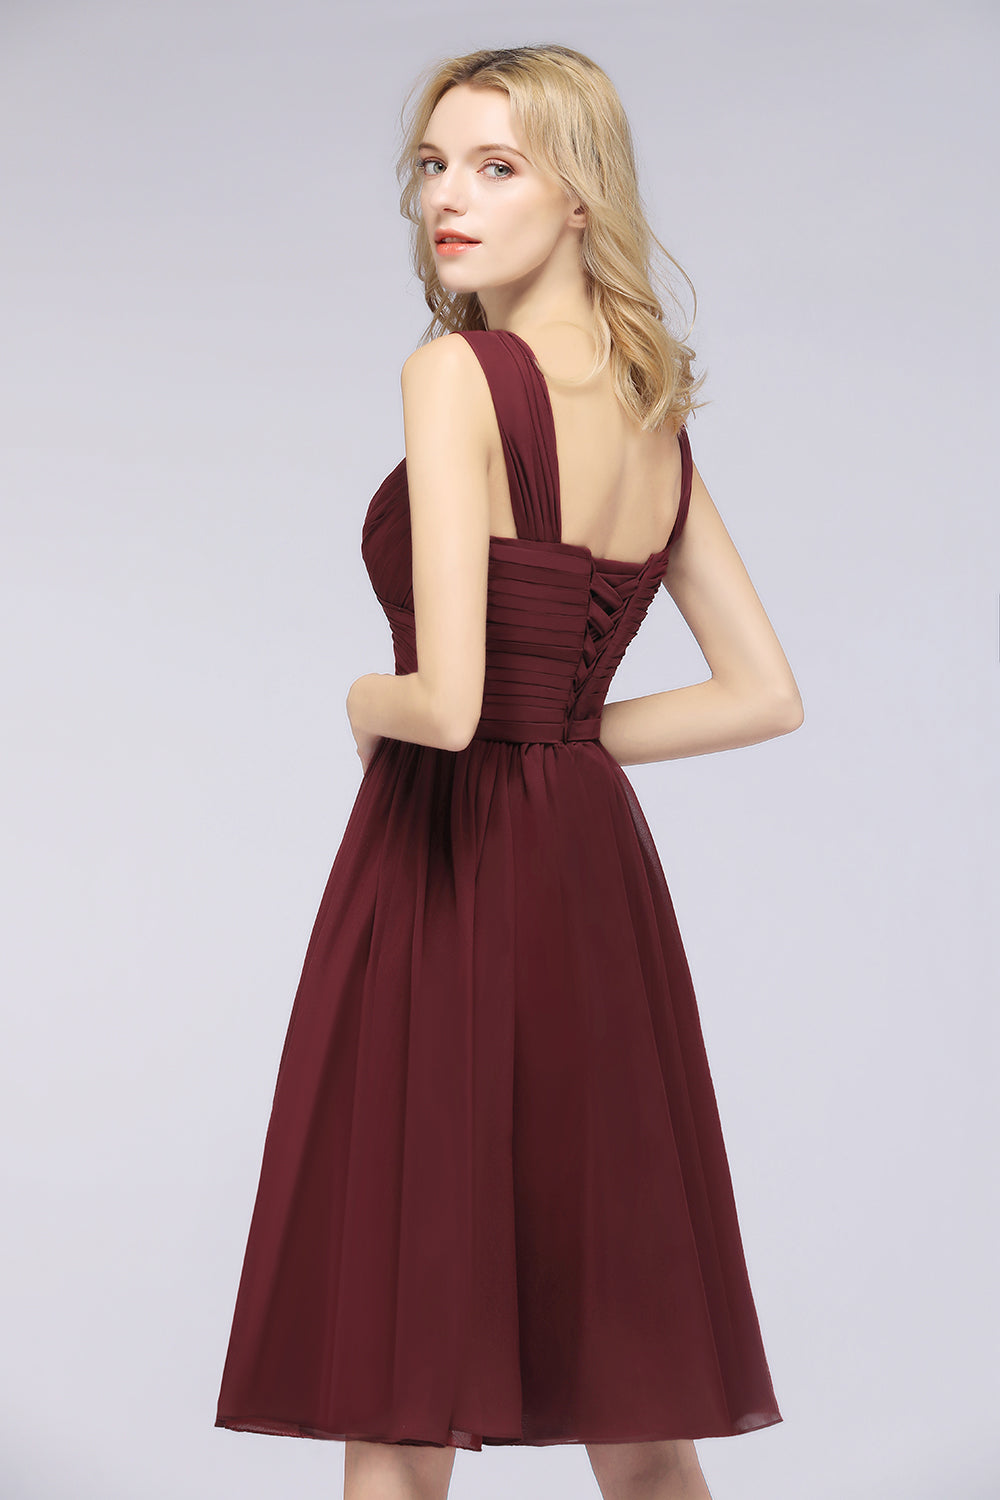 Elegant Ruffle Straps Short Burgundy Bridesmaid Dresses Online-27dress